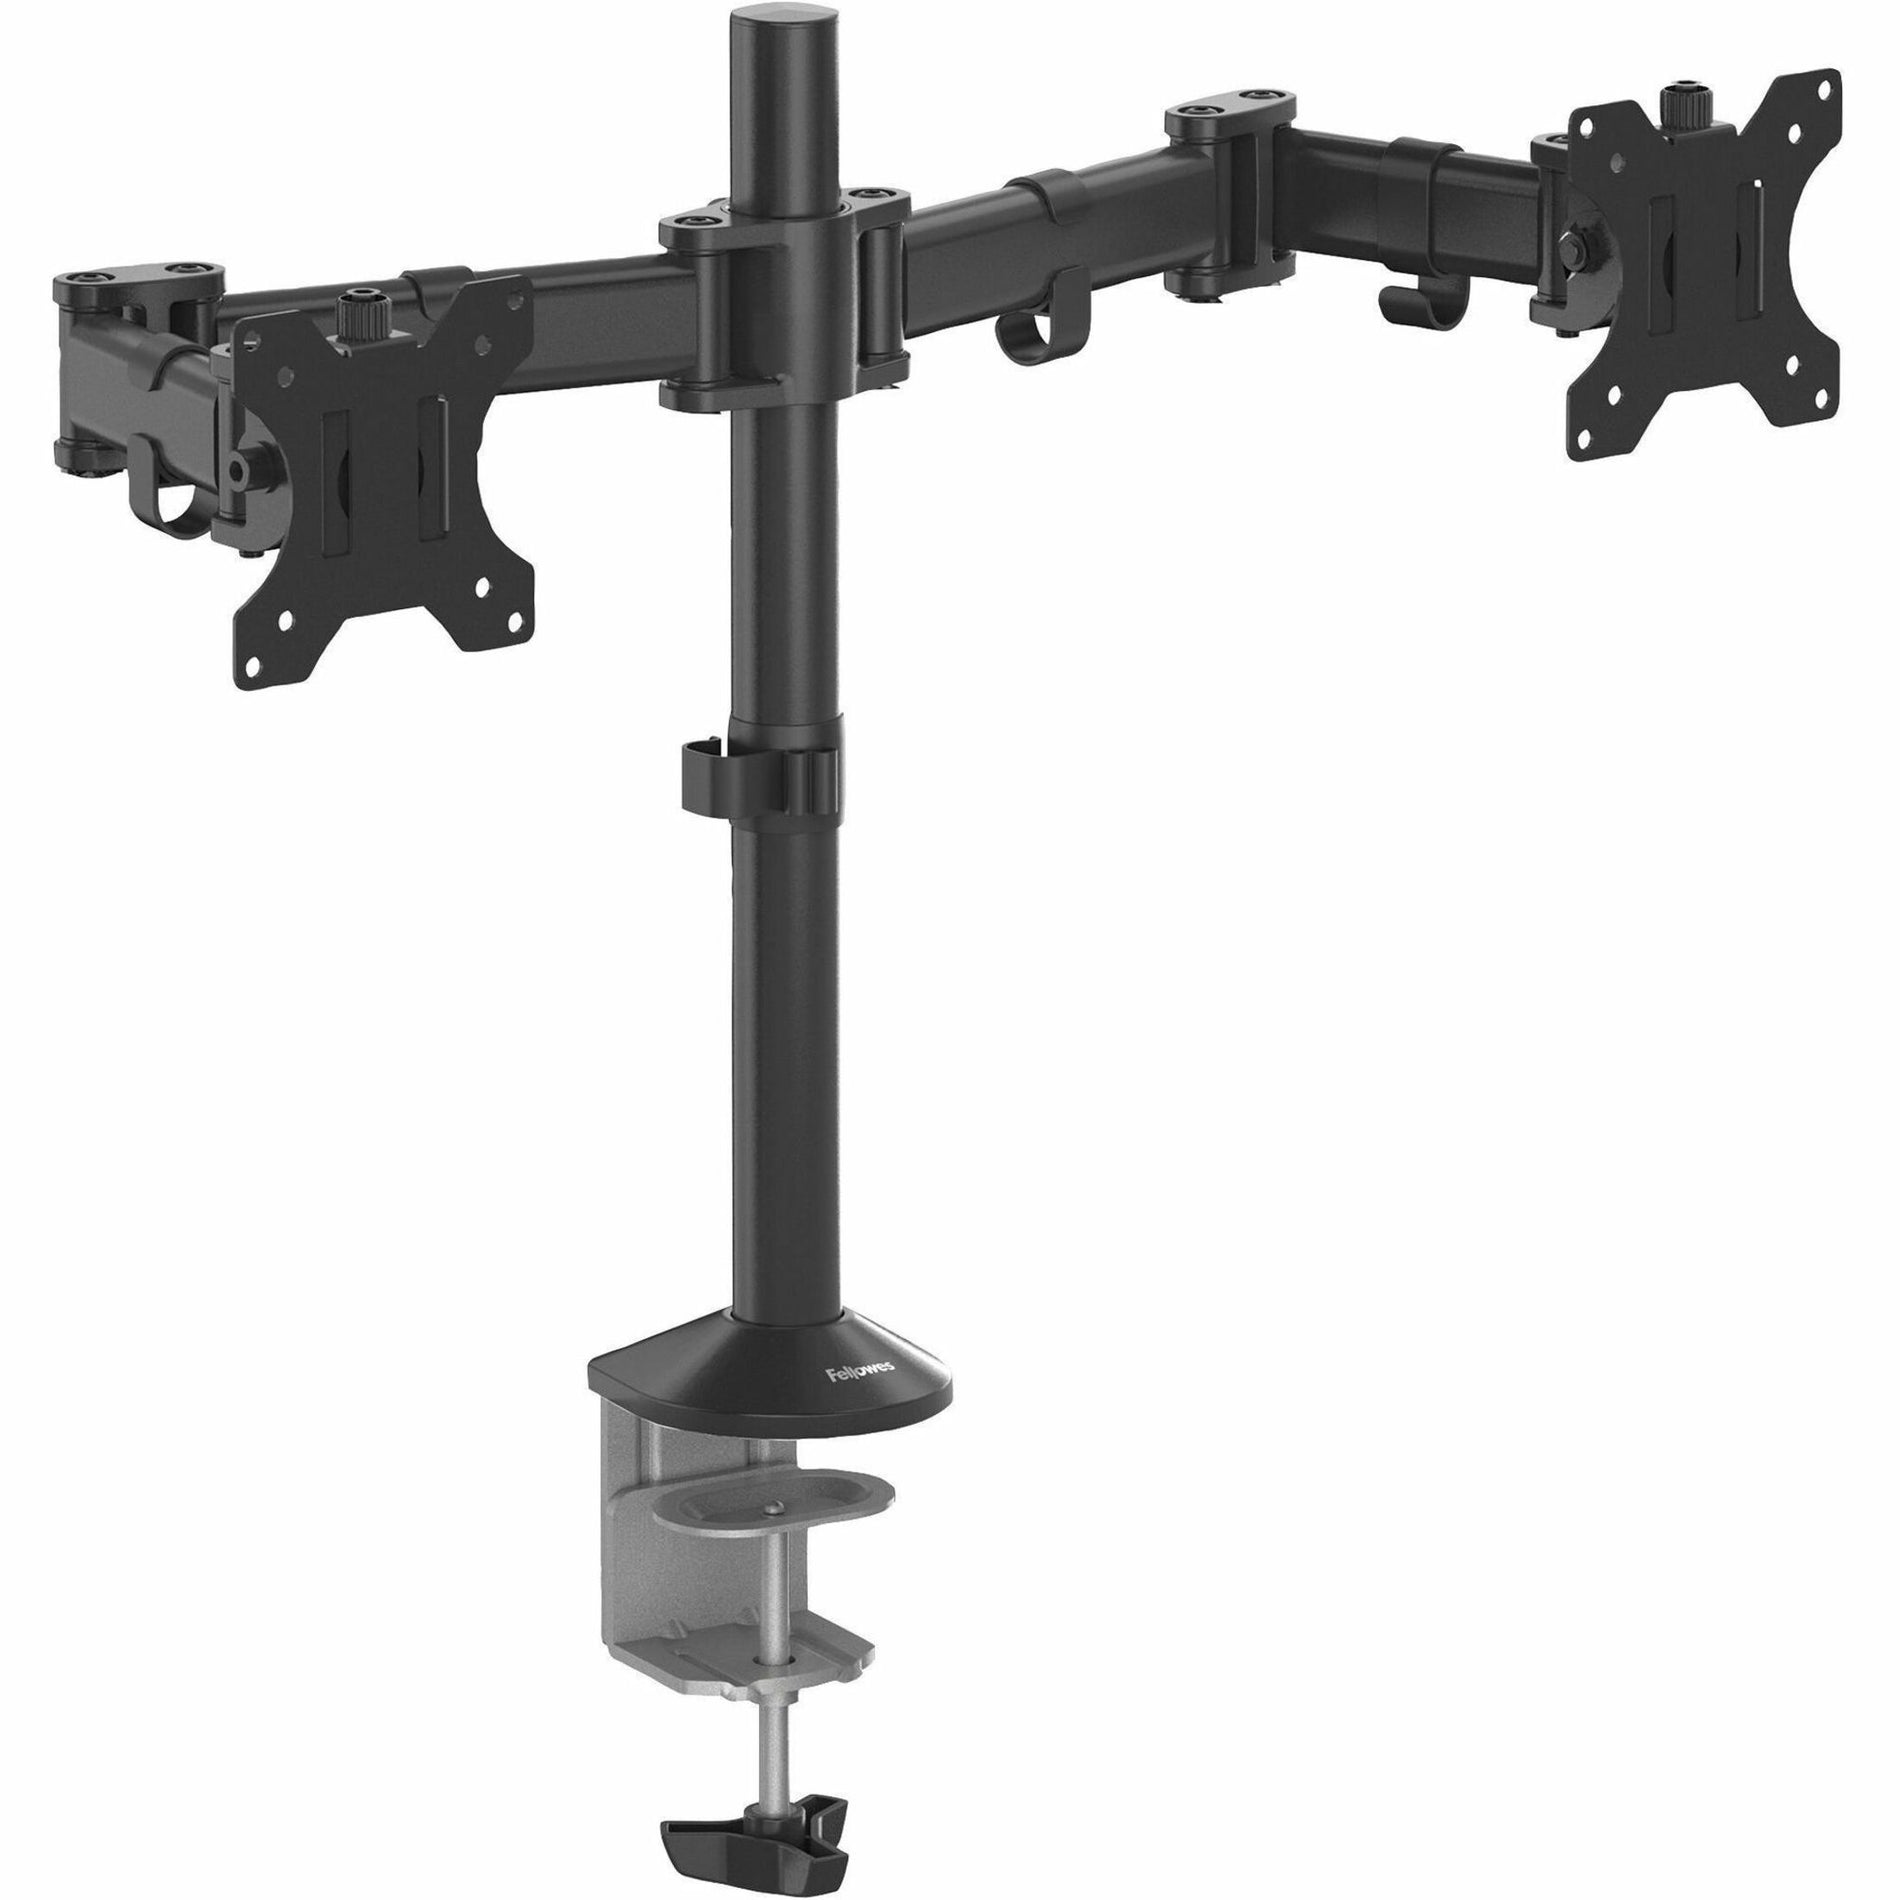 Fellowes 8502601 Reflex Dual Monitor Arm, Desk Mount, Supports 2 Monitors, 48 lb Maximum Load Capacity